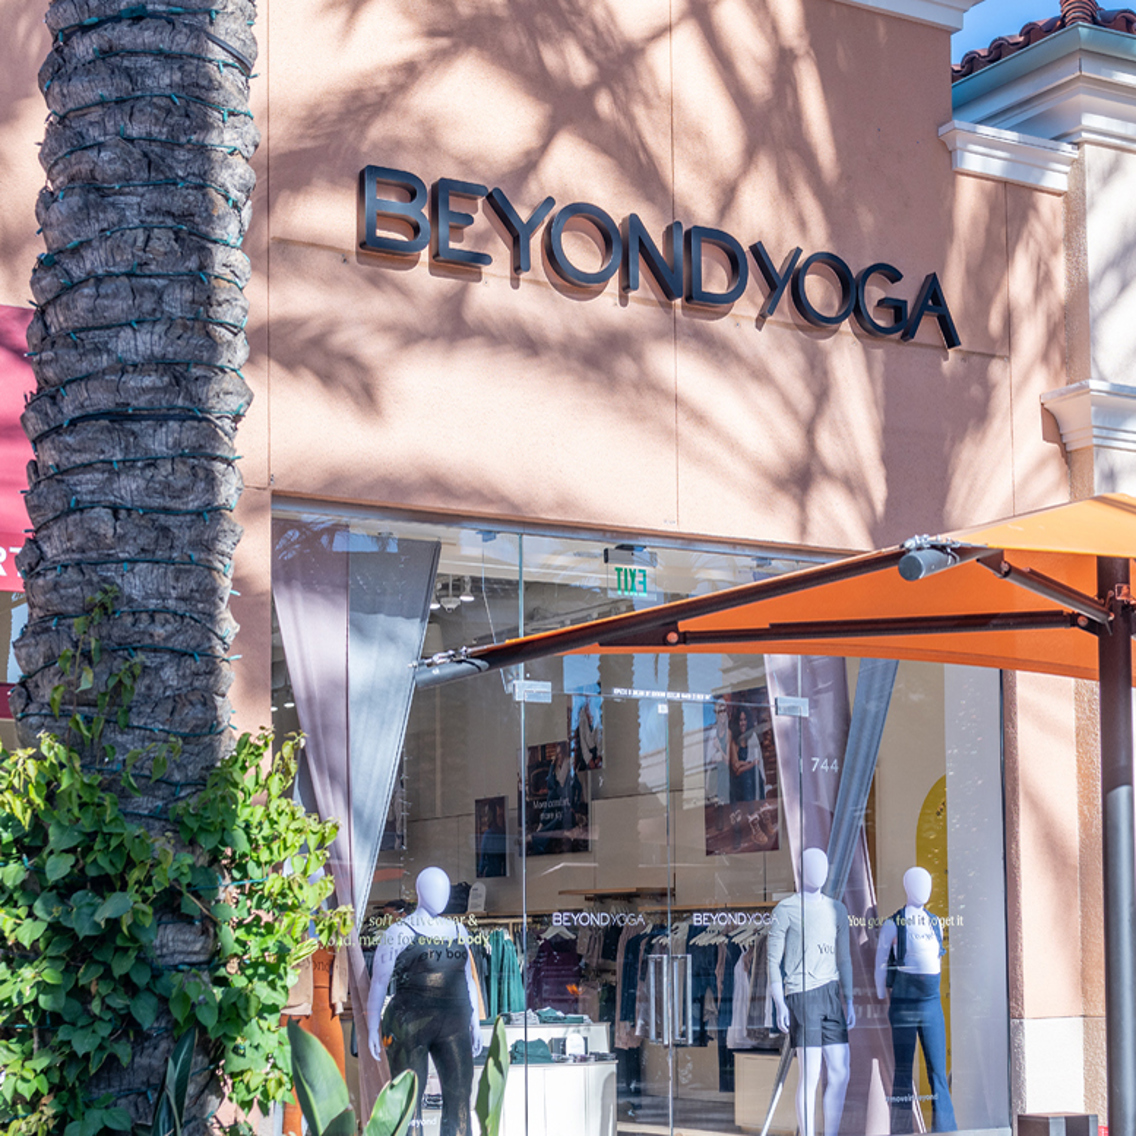 Beyond Yoga dives into retail